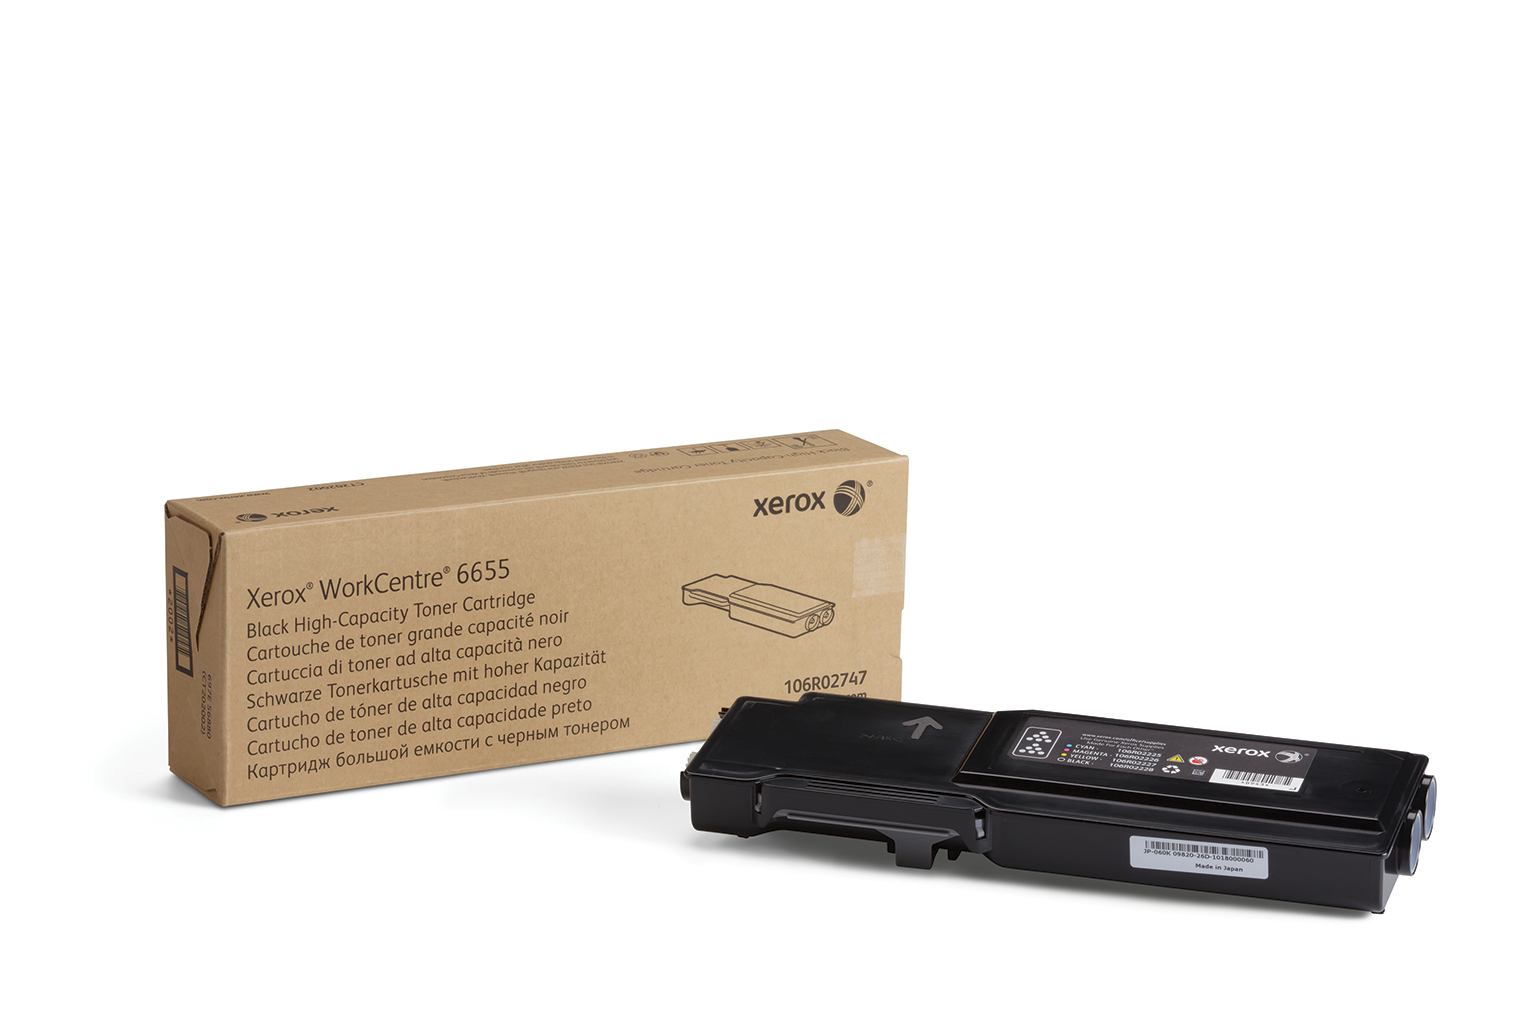 Photos - Ink & Toner Cartridge Xerox 106R02747 Toner cartridge black, 11K pages ISO/IEC 19798 for Xer 